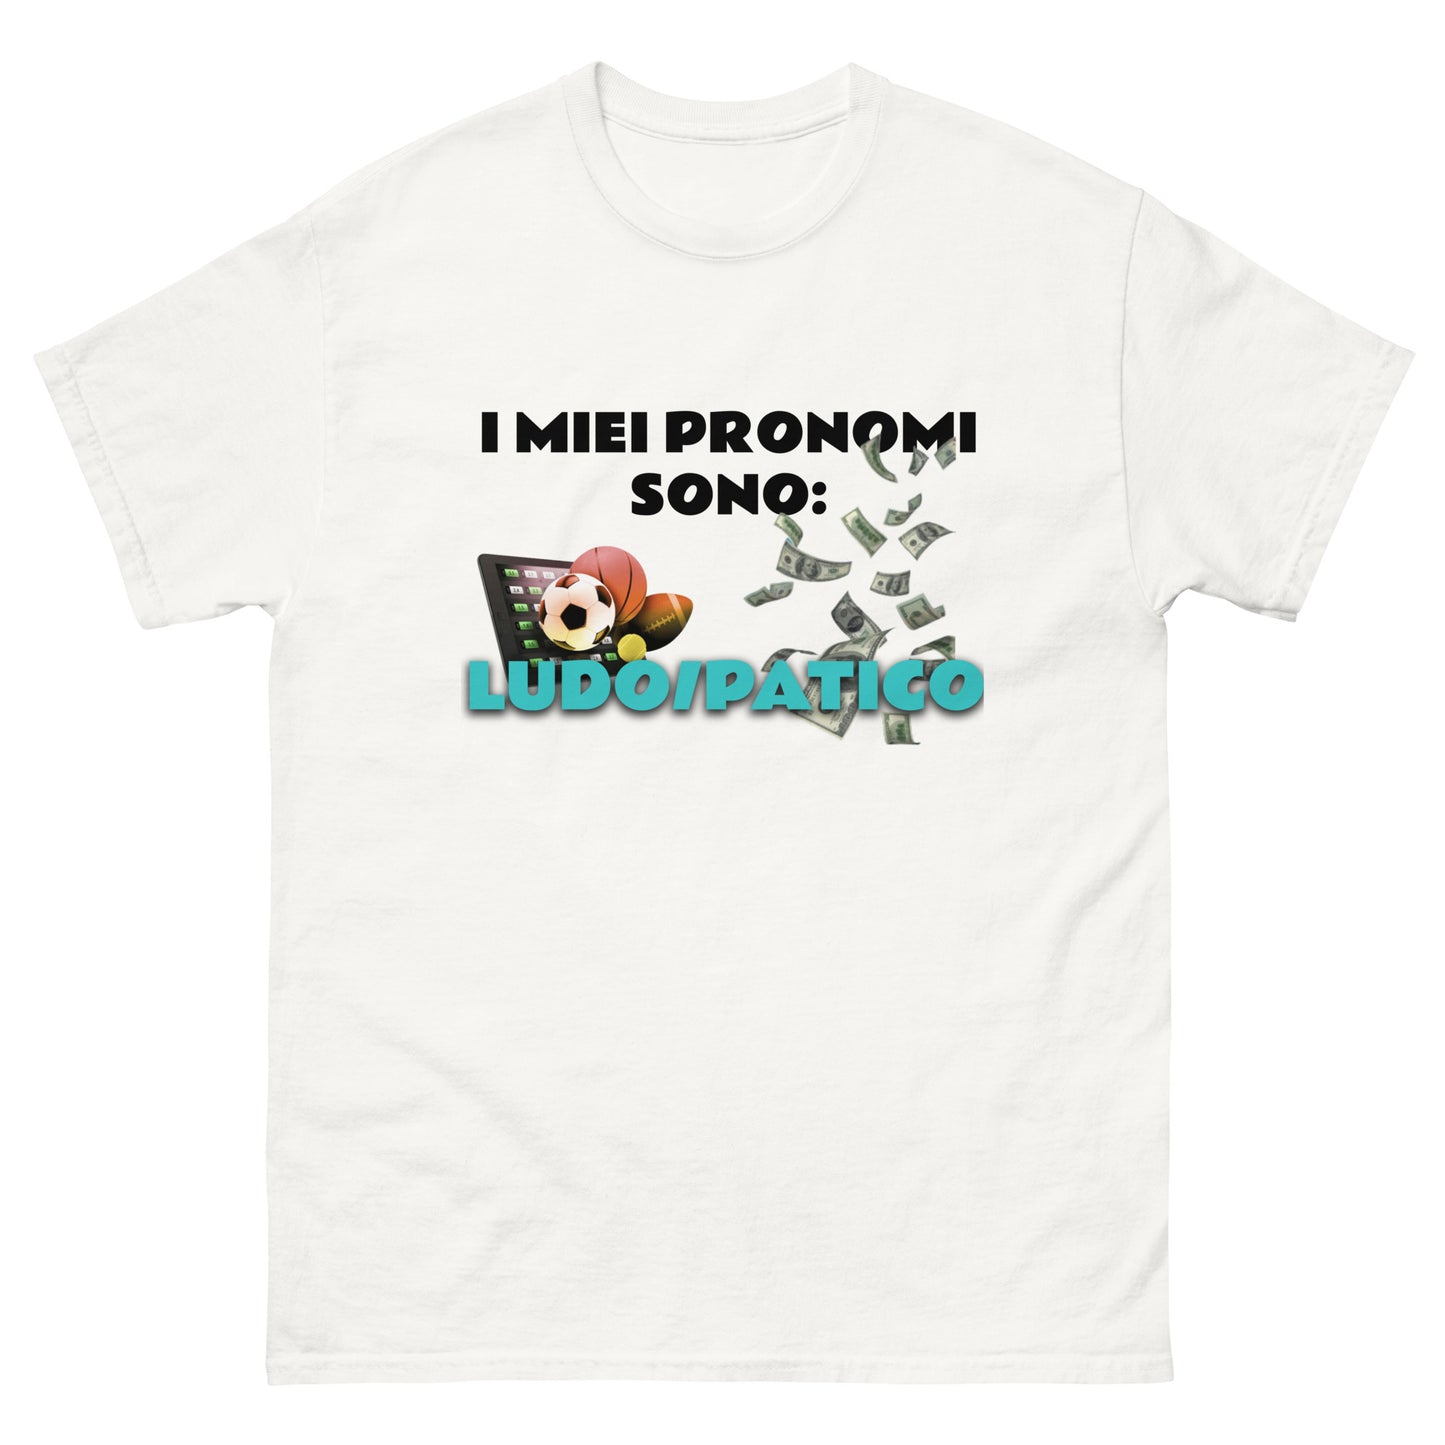 Ludo/Patico T-Shirt